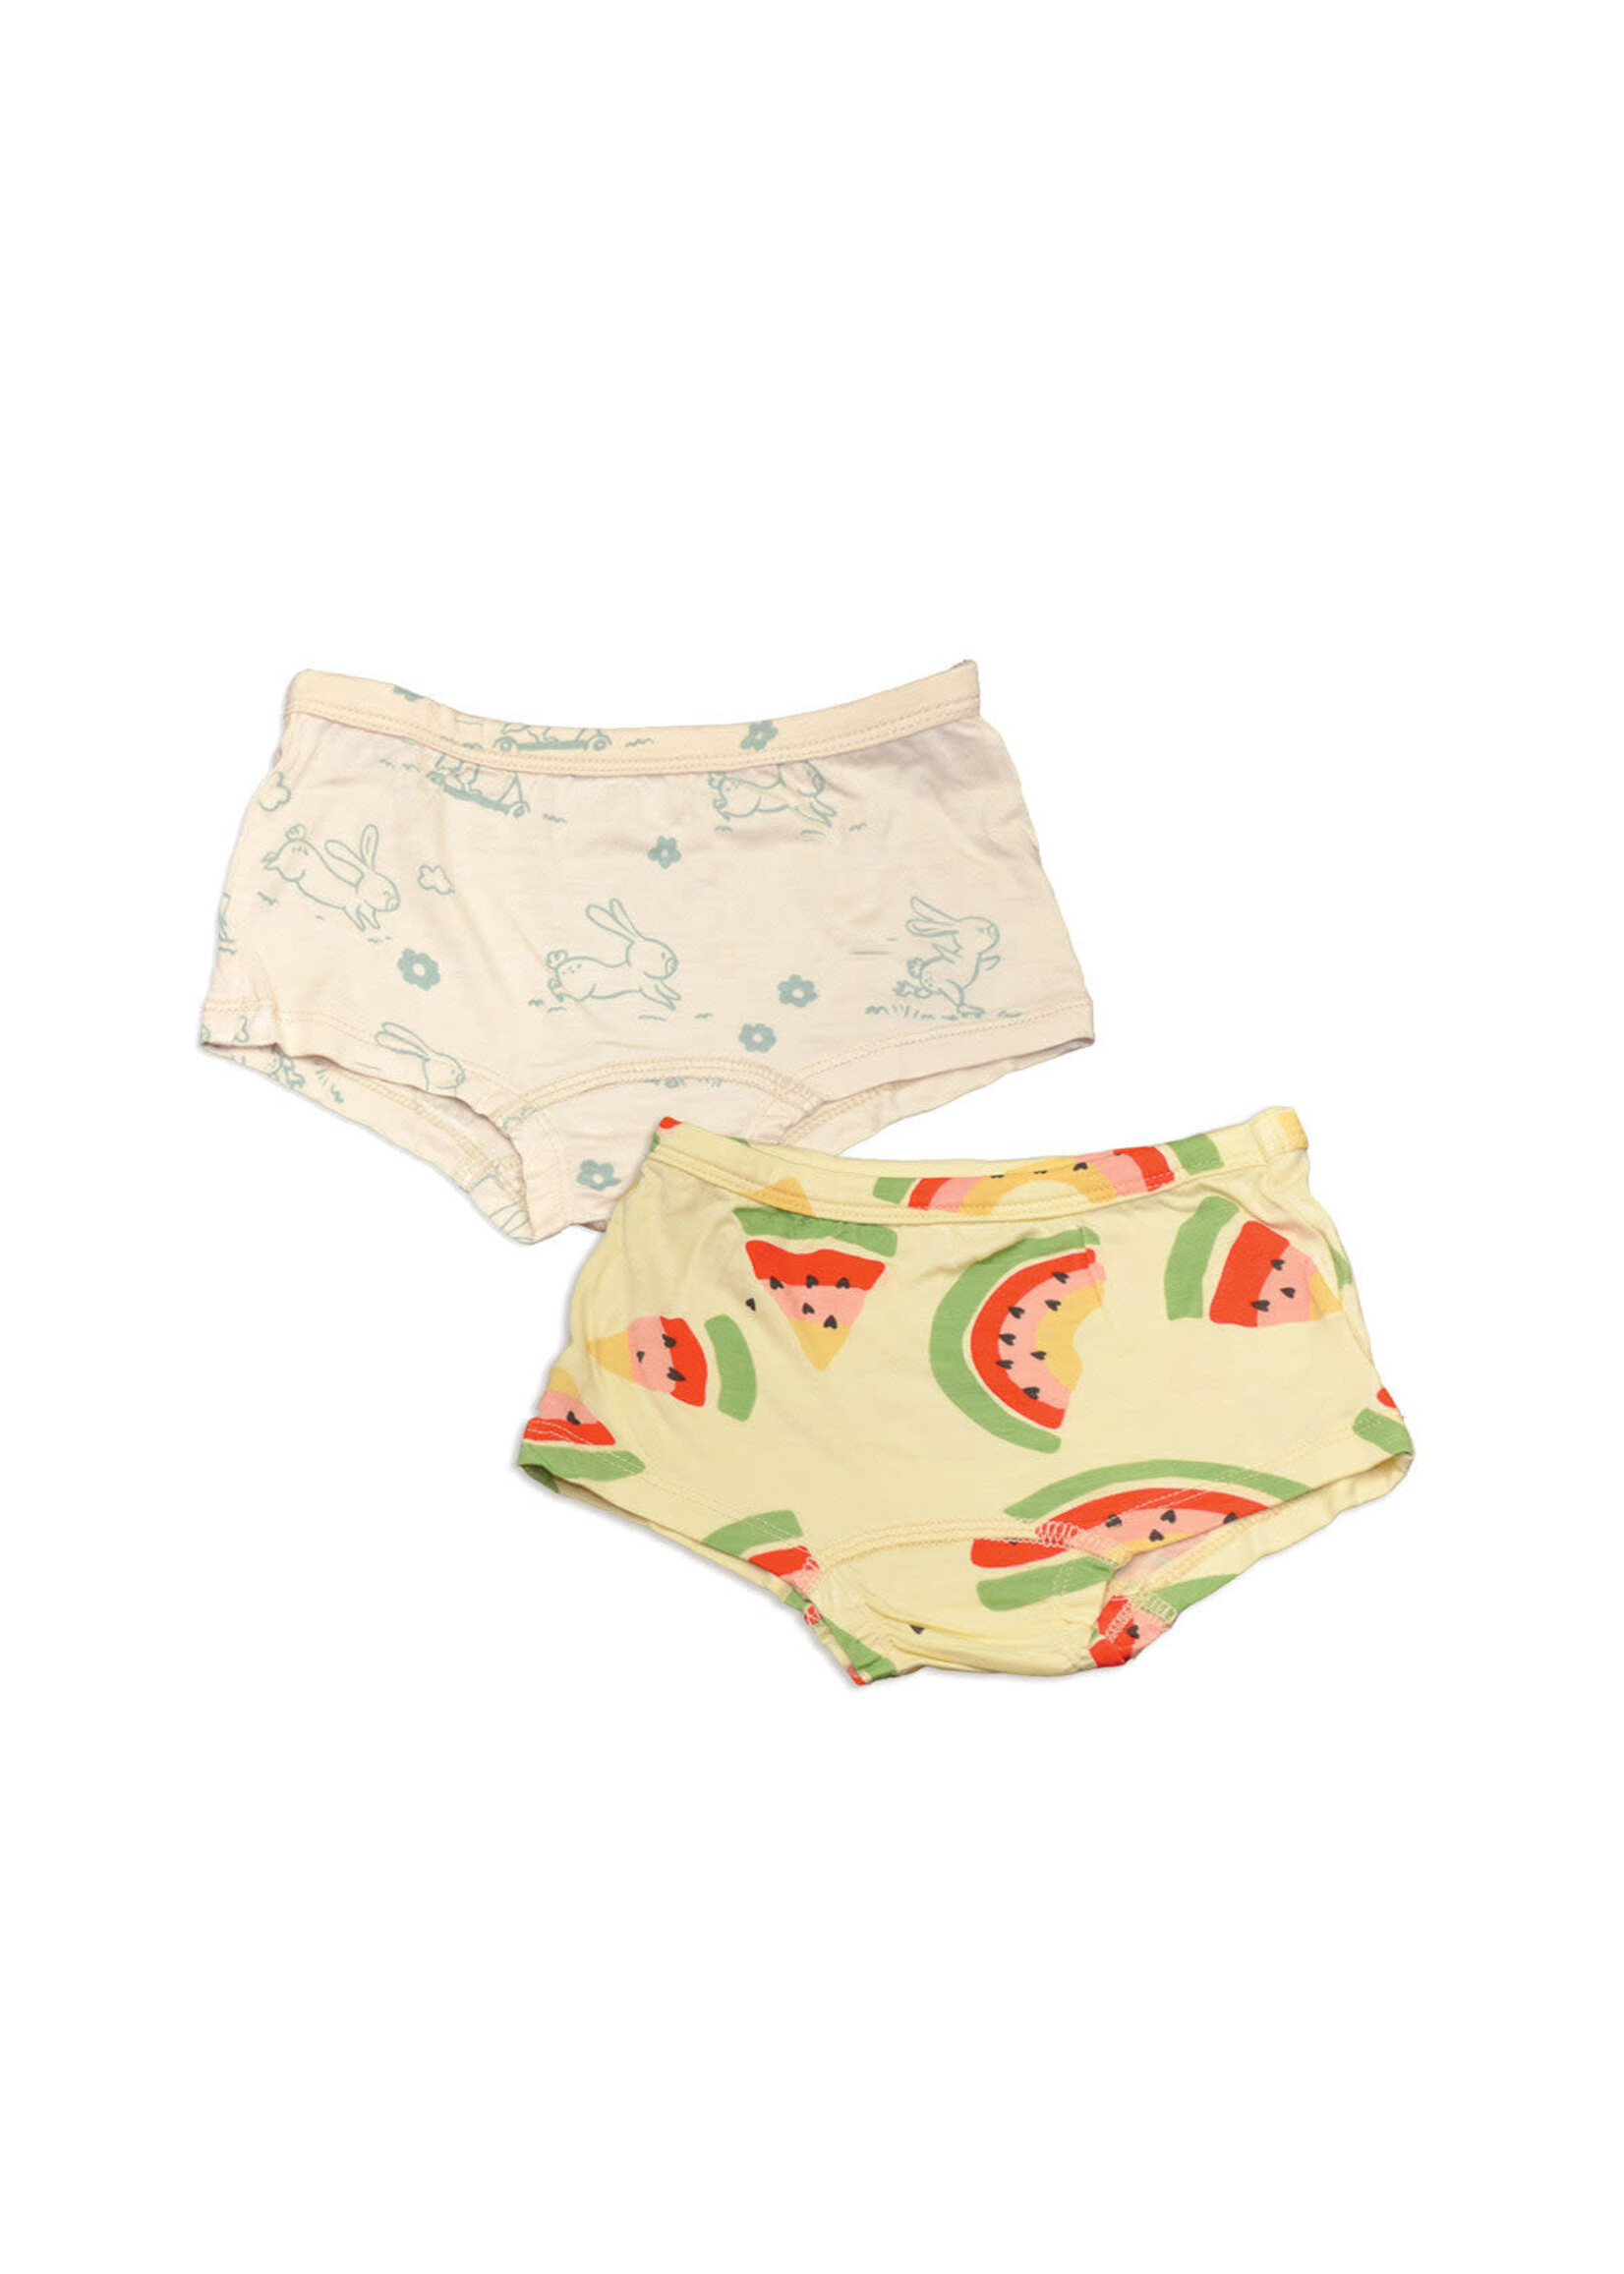 Silkberry Baby Silkberry Baby Bamboo Girl Shorts Underwear- Watermelon/Bunny